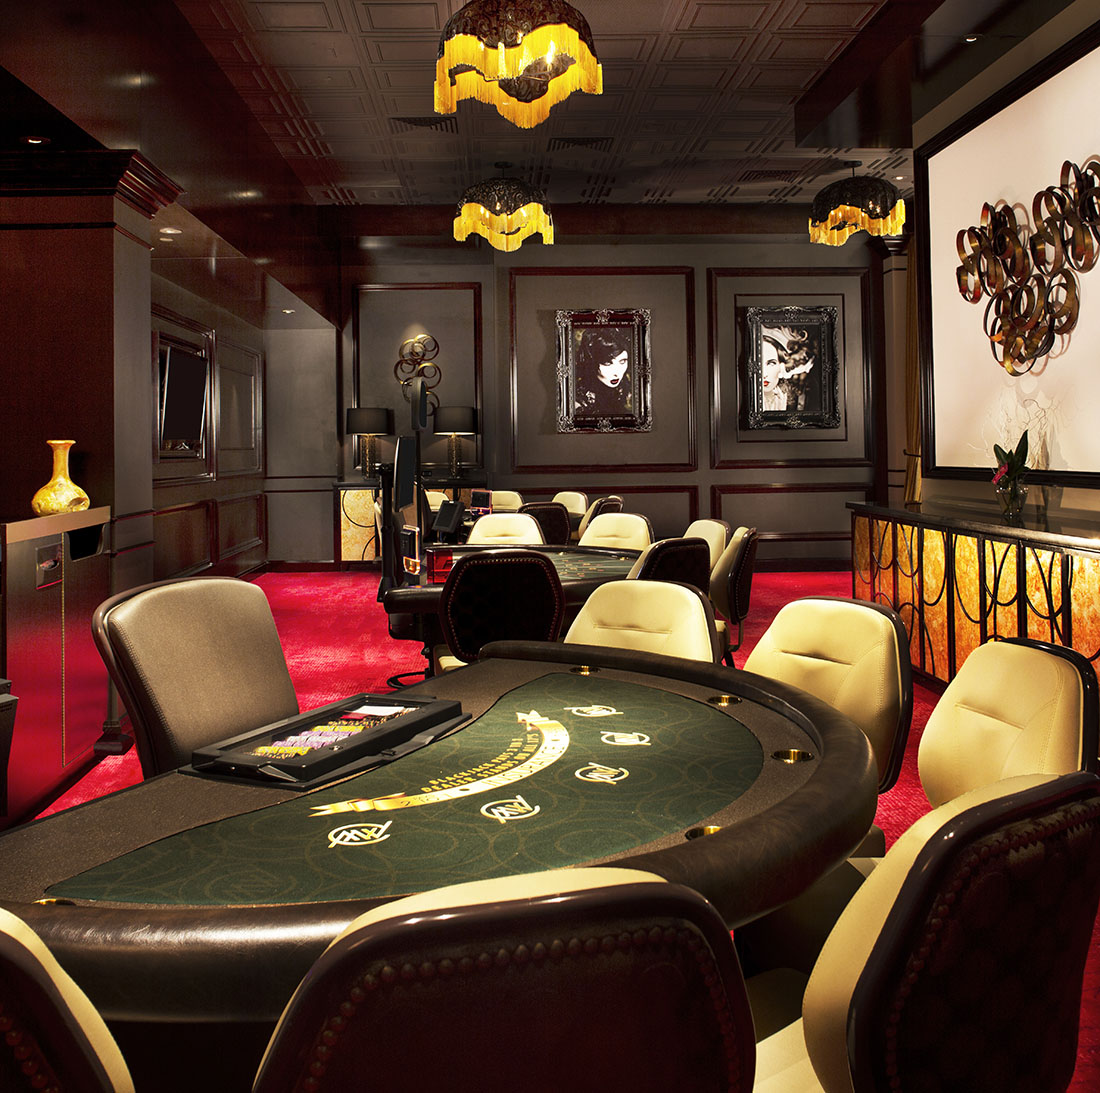 The Cromwell Casino